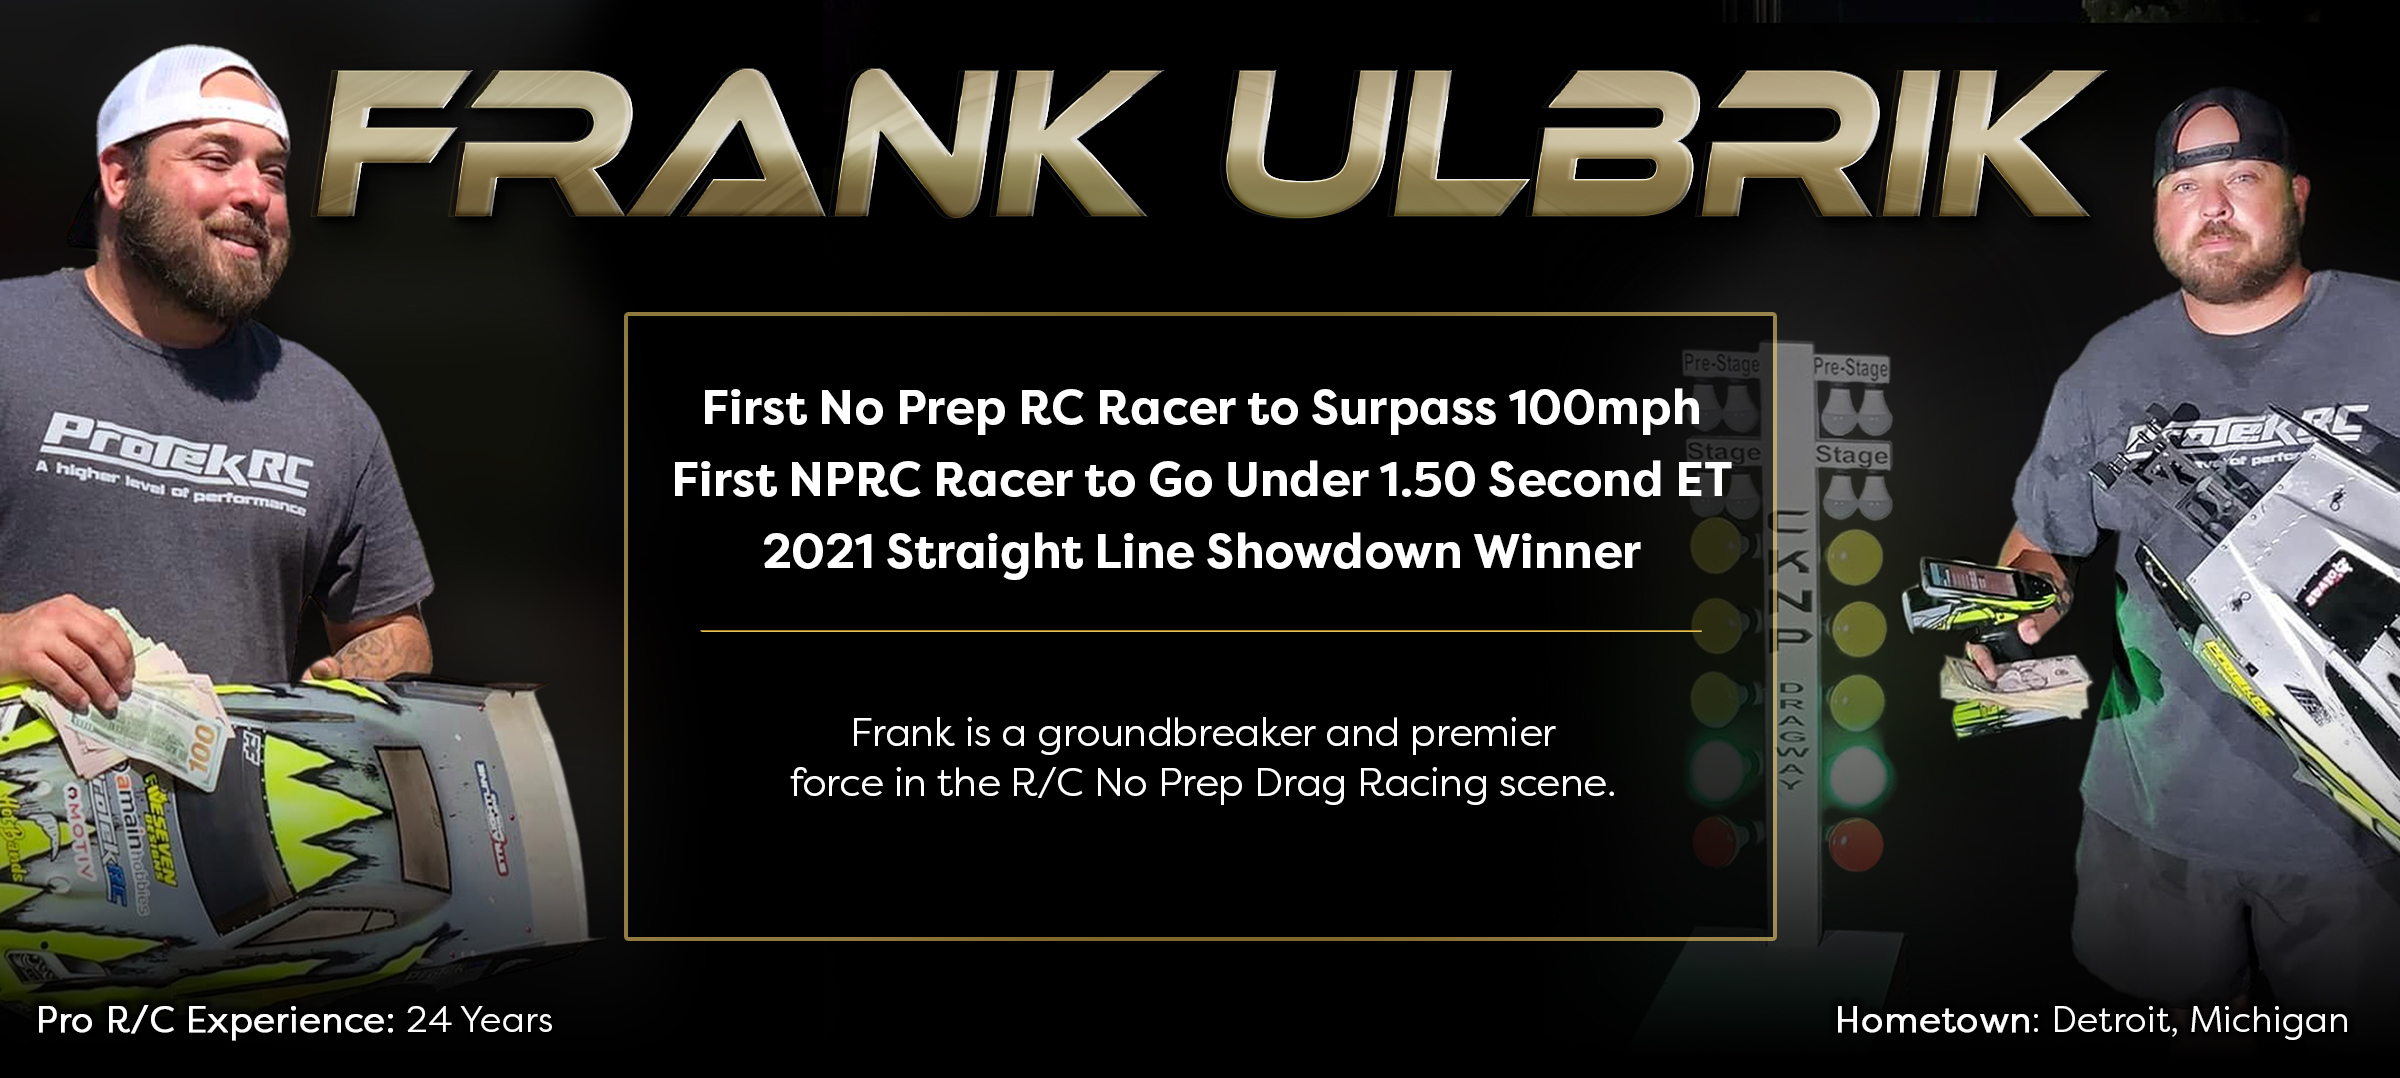 ProTek RC PRO Team Driver Frank Ulbrik